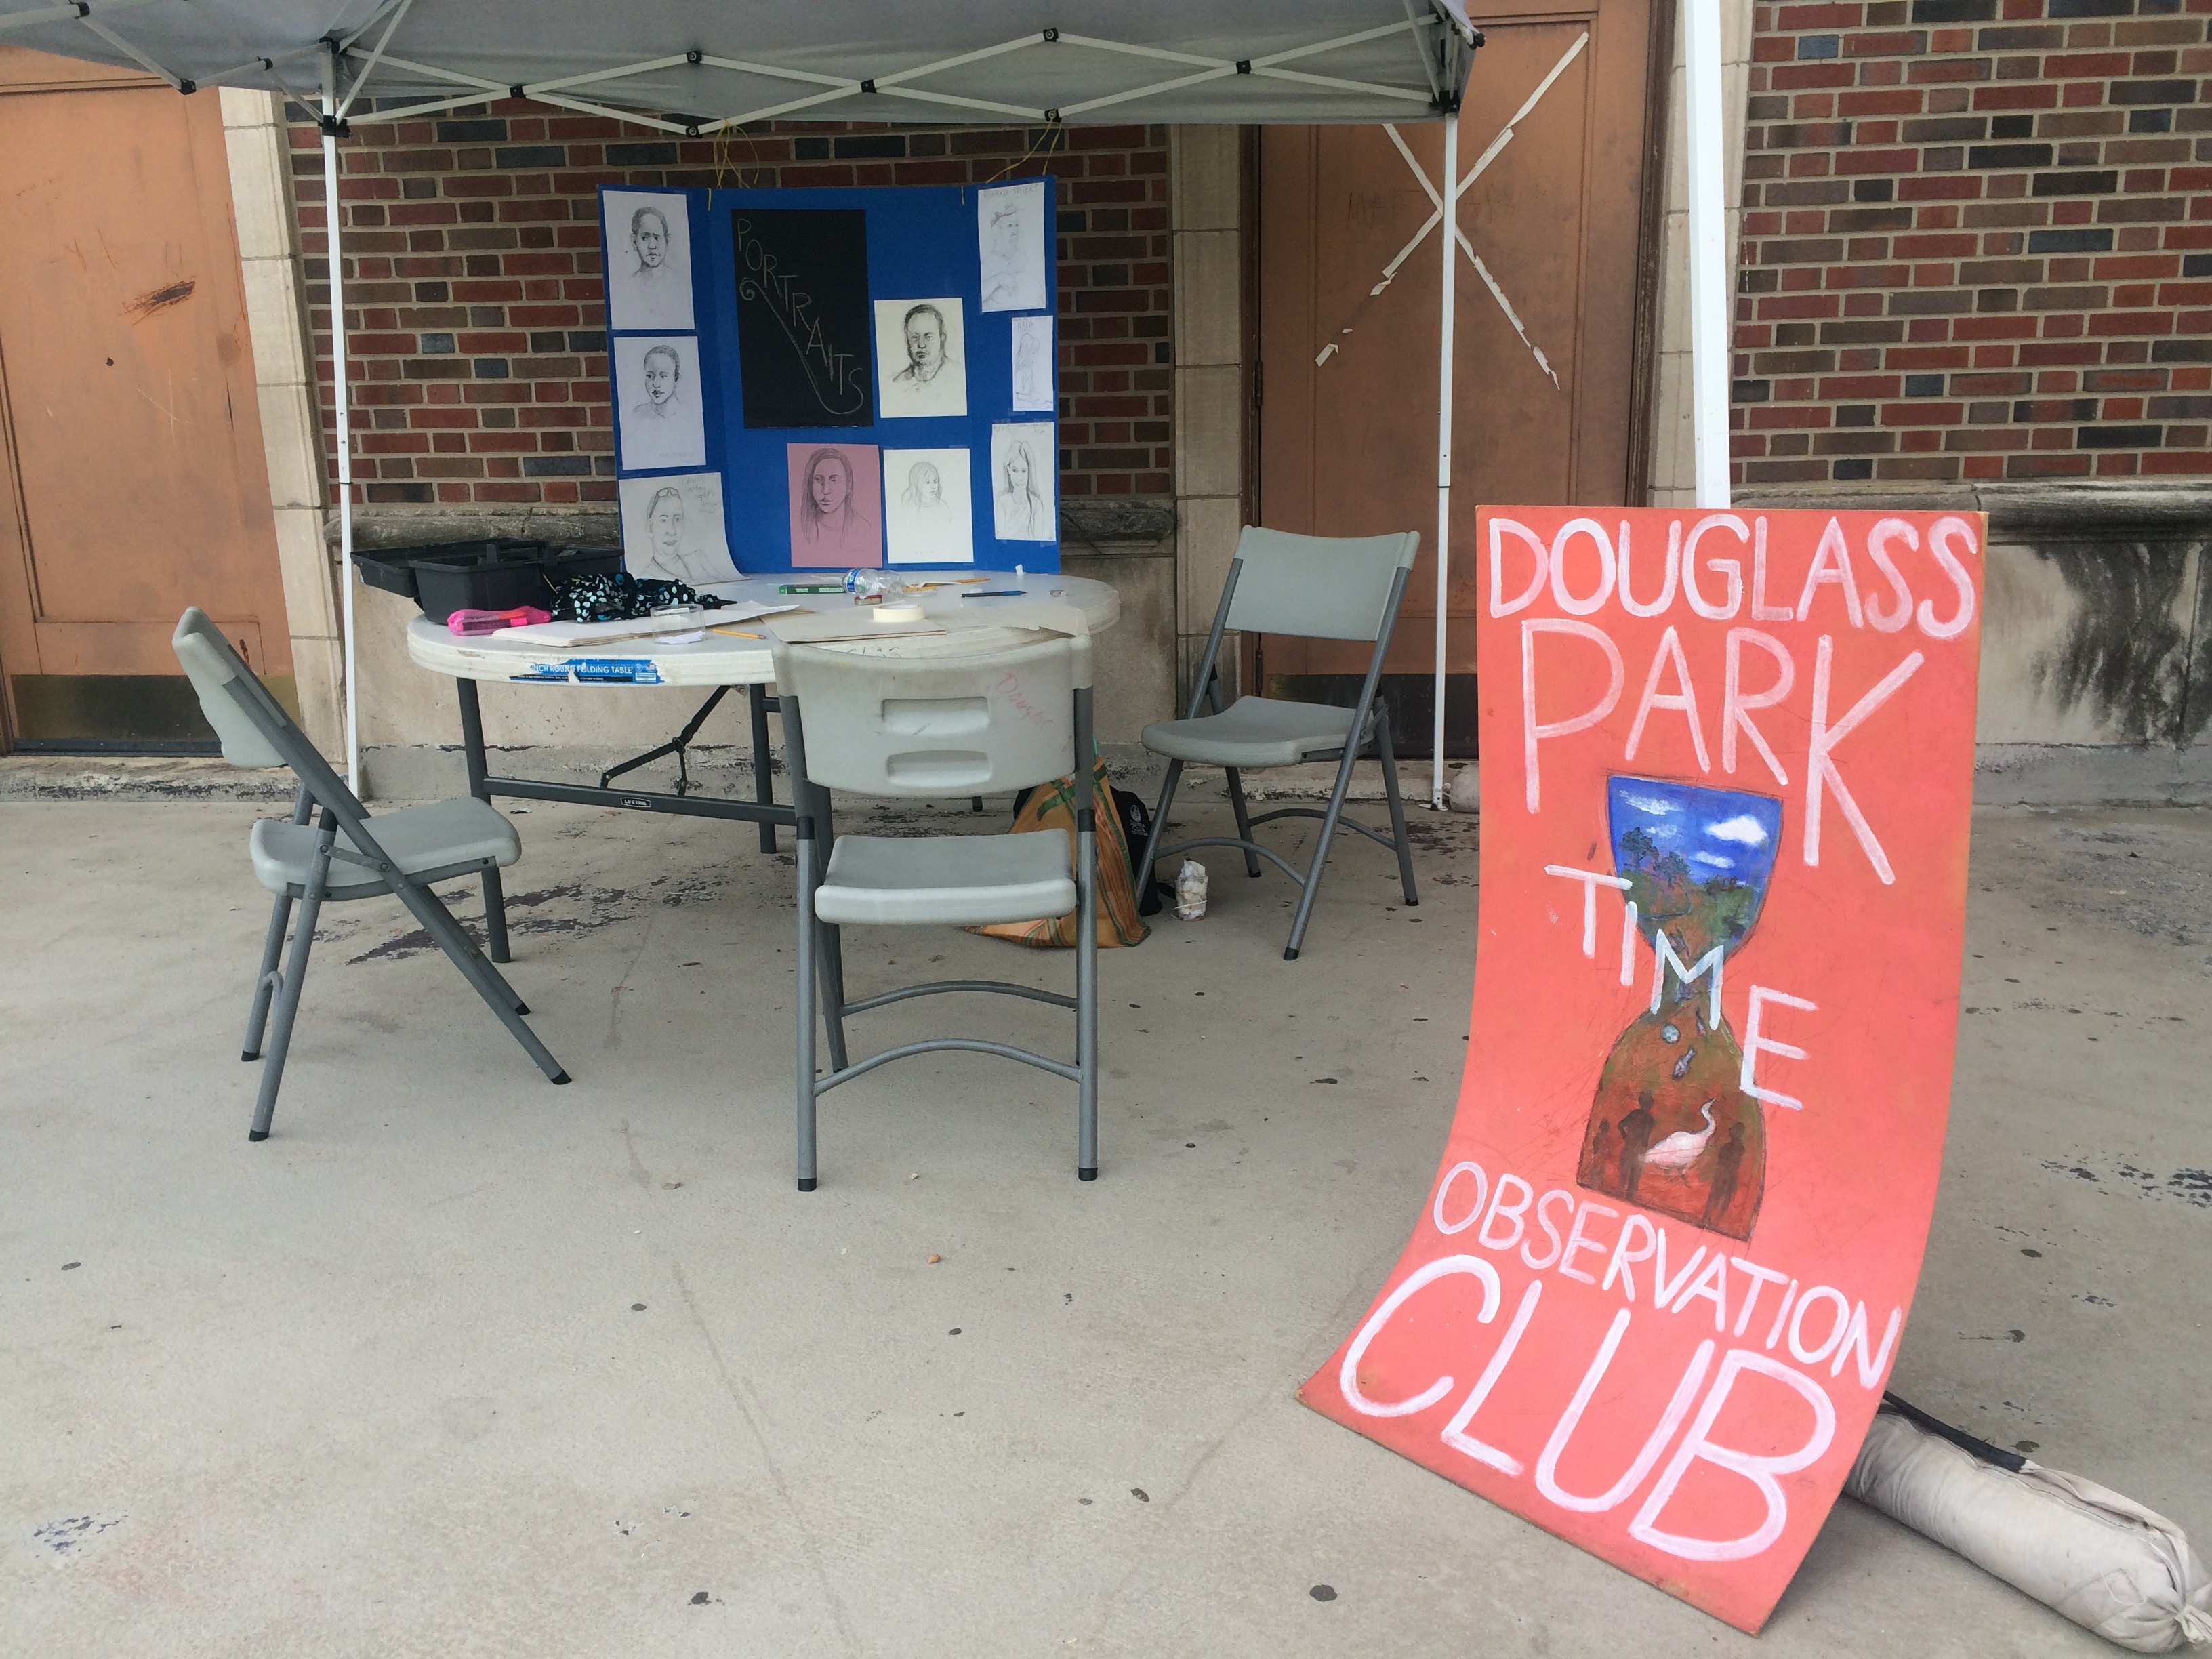 picture of Douglas Park Time Observation Club